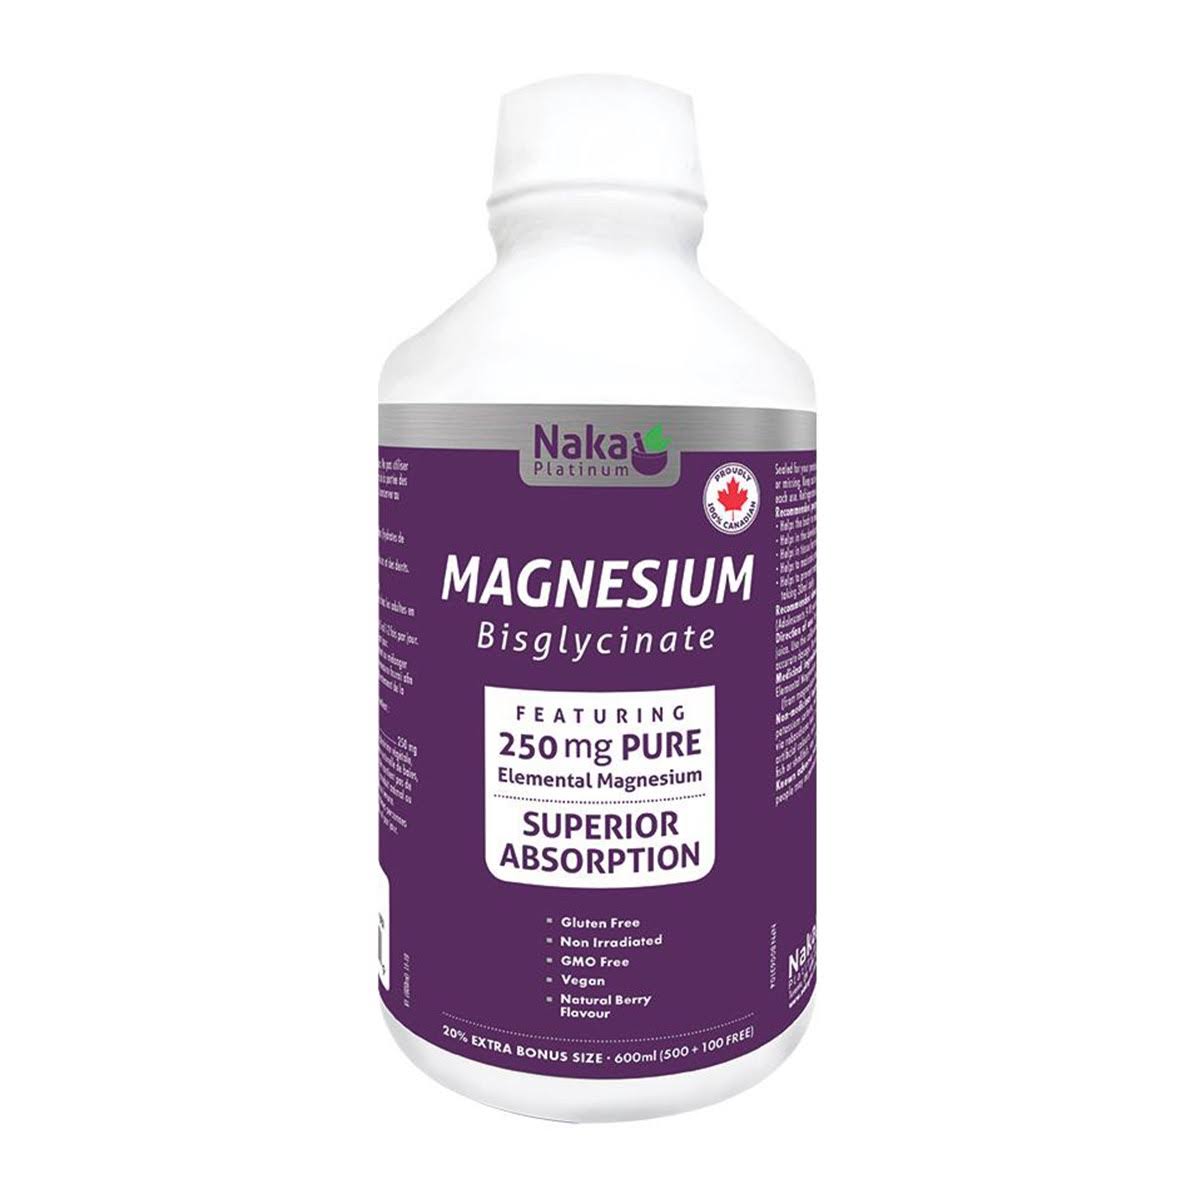 NAKA Magnesium Bisglycinate 250mg 600mL